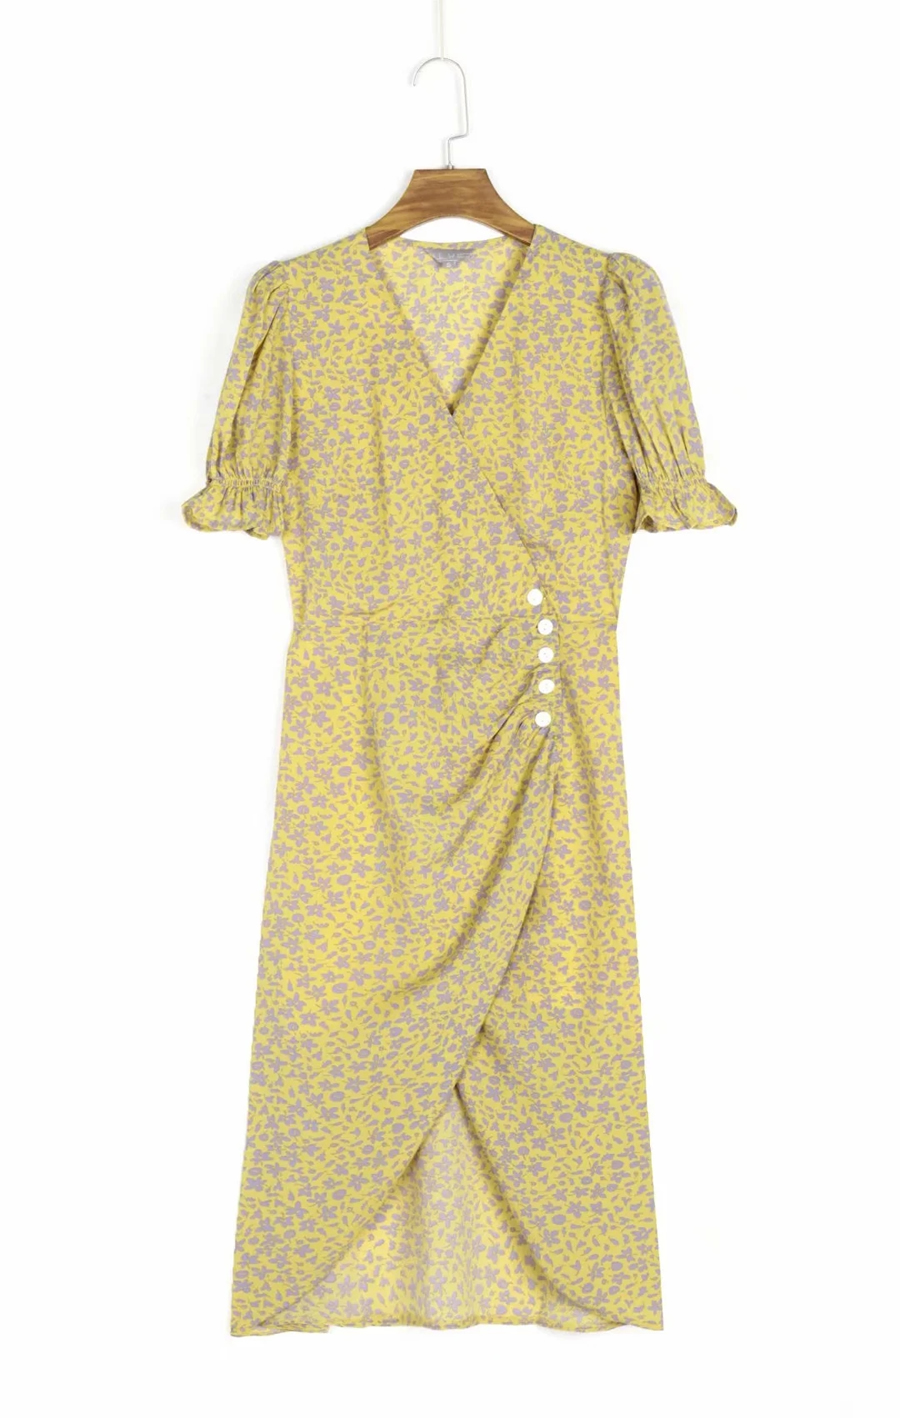 Fashion Yellow Floral Floral V-neck Printed Short Sleeve Dress,Long Dress